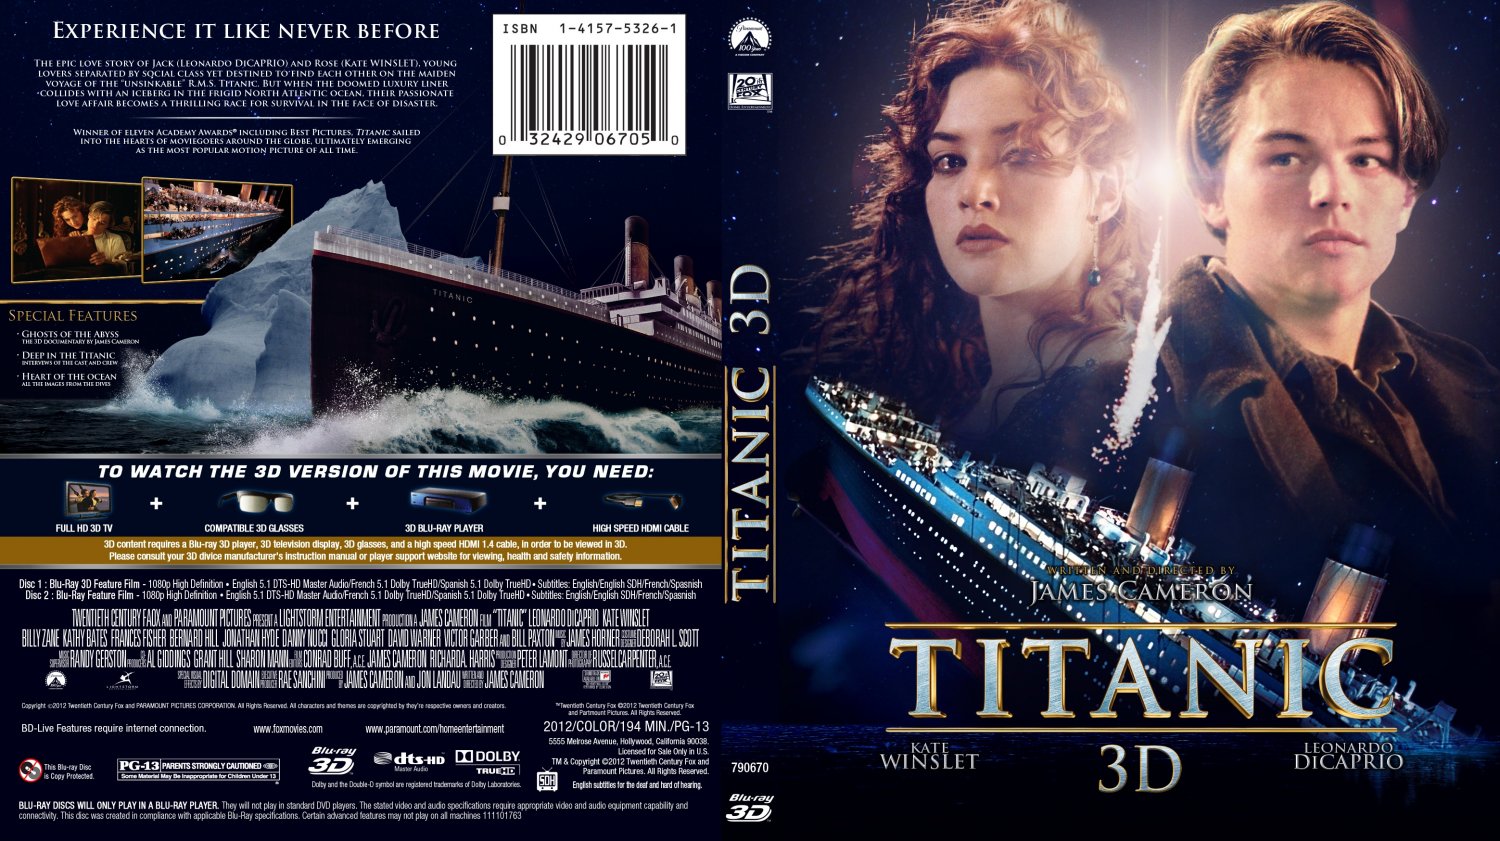 Titanic movie free download utorrent de roubaix le vieux fusil torrent